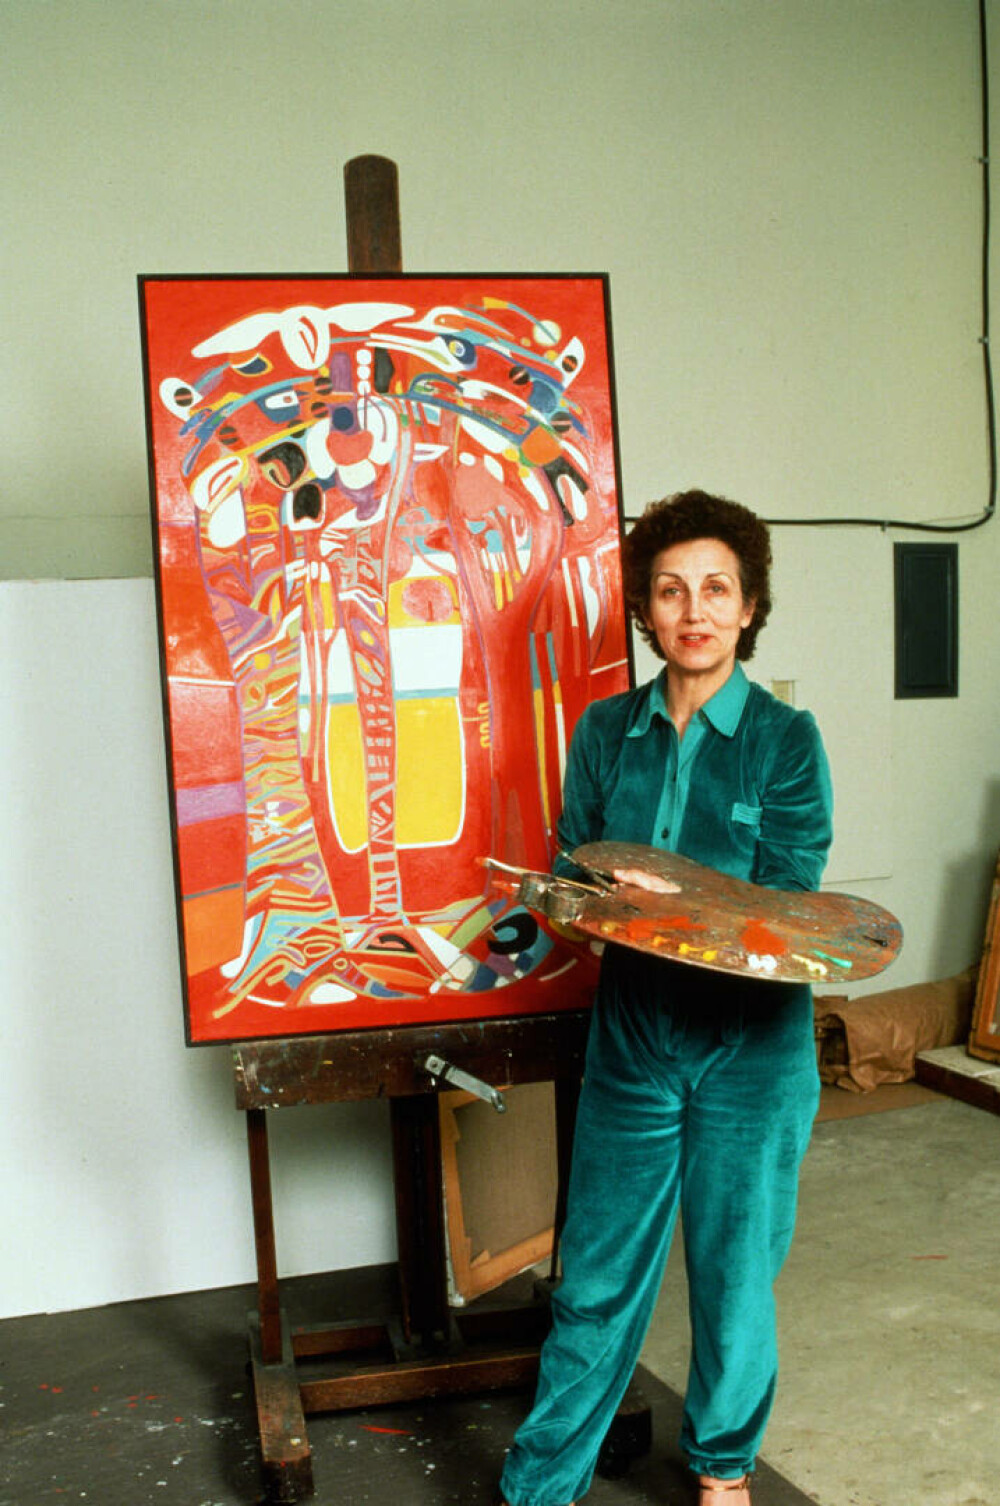 A murit pictorița Françoise Gilot, care a fost partenera lui Pablo Picasso. Avea 101 ani | GALERIE FOTO - Imaginea 11